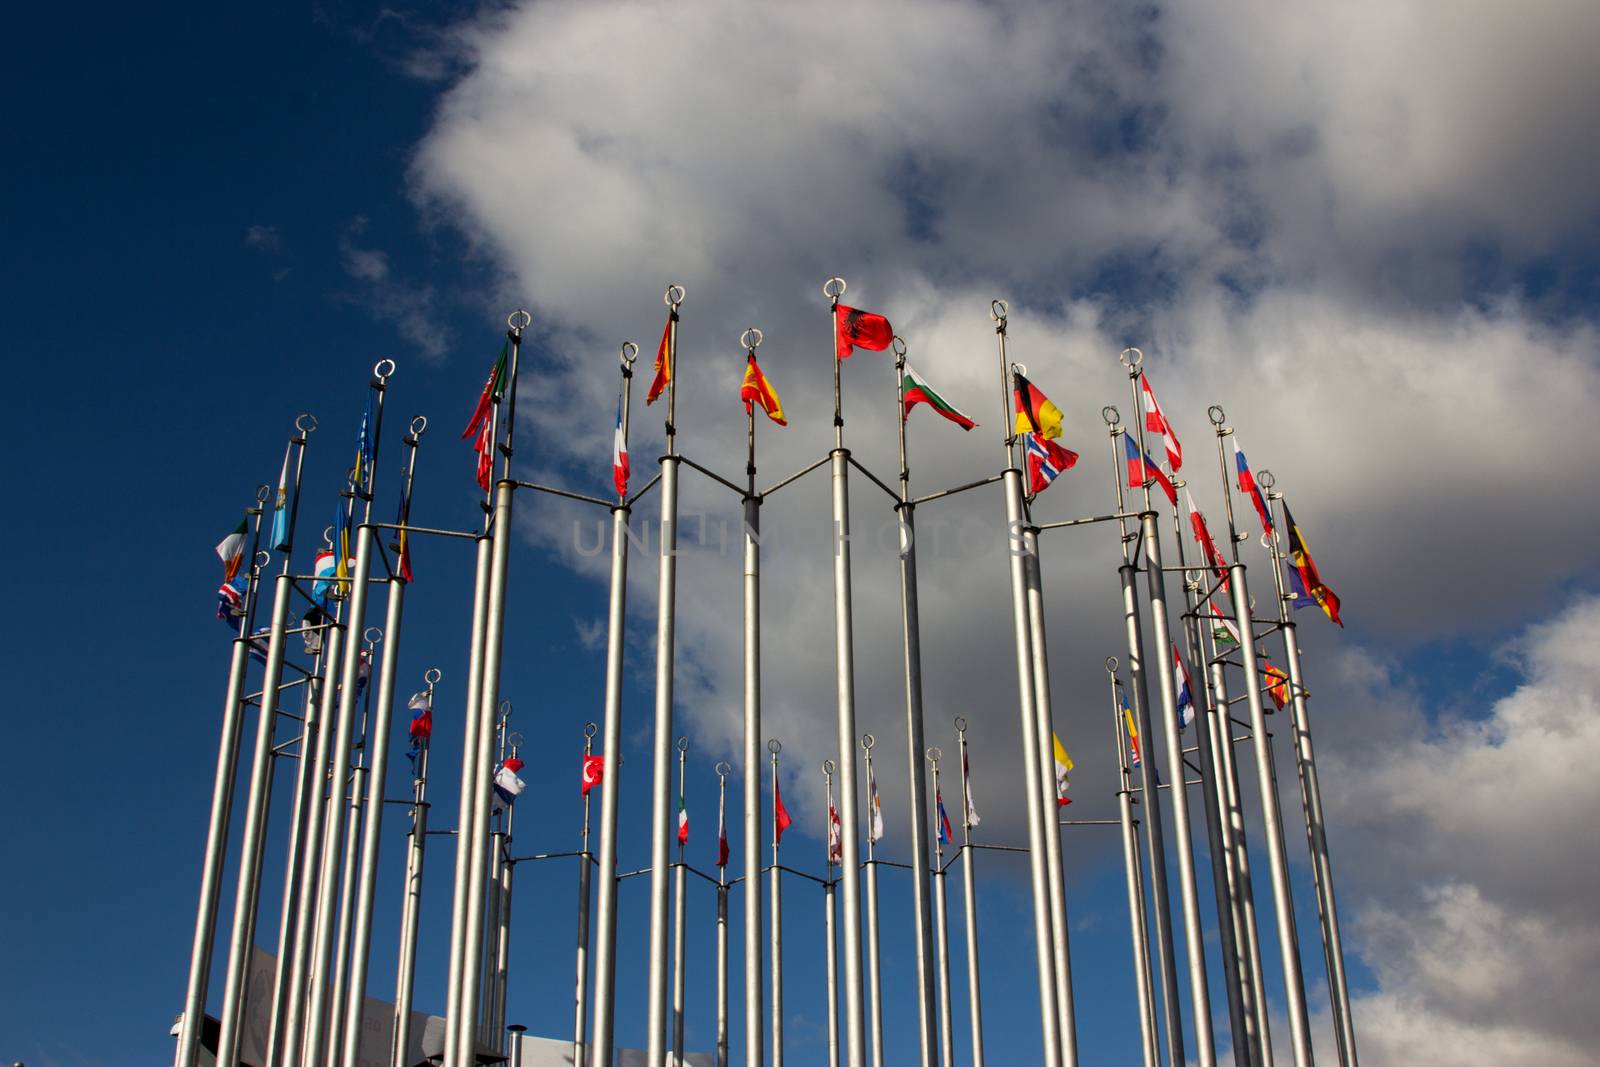 Group og Europeans flag outdoors, on sky background